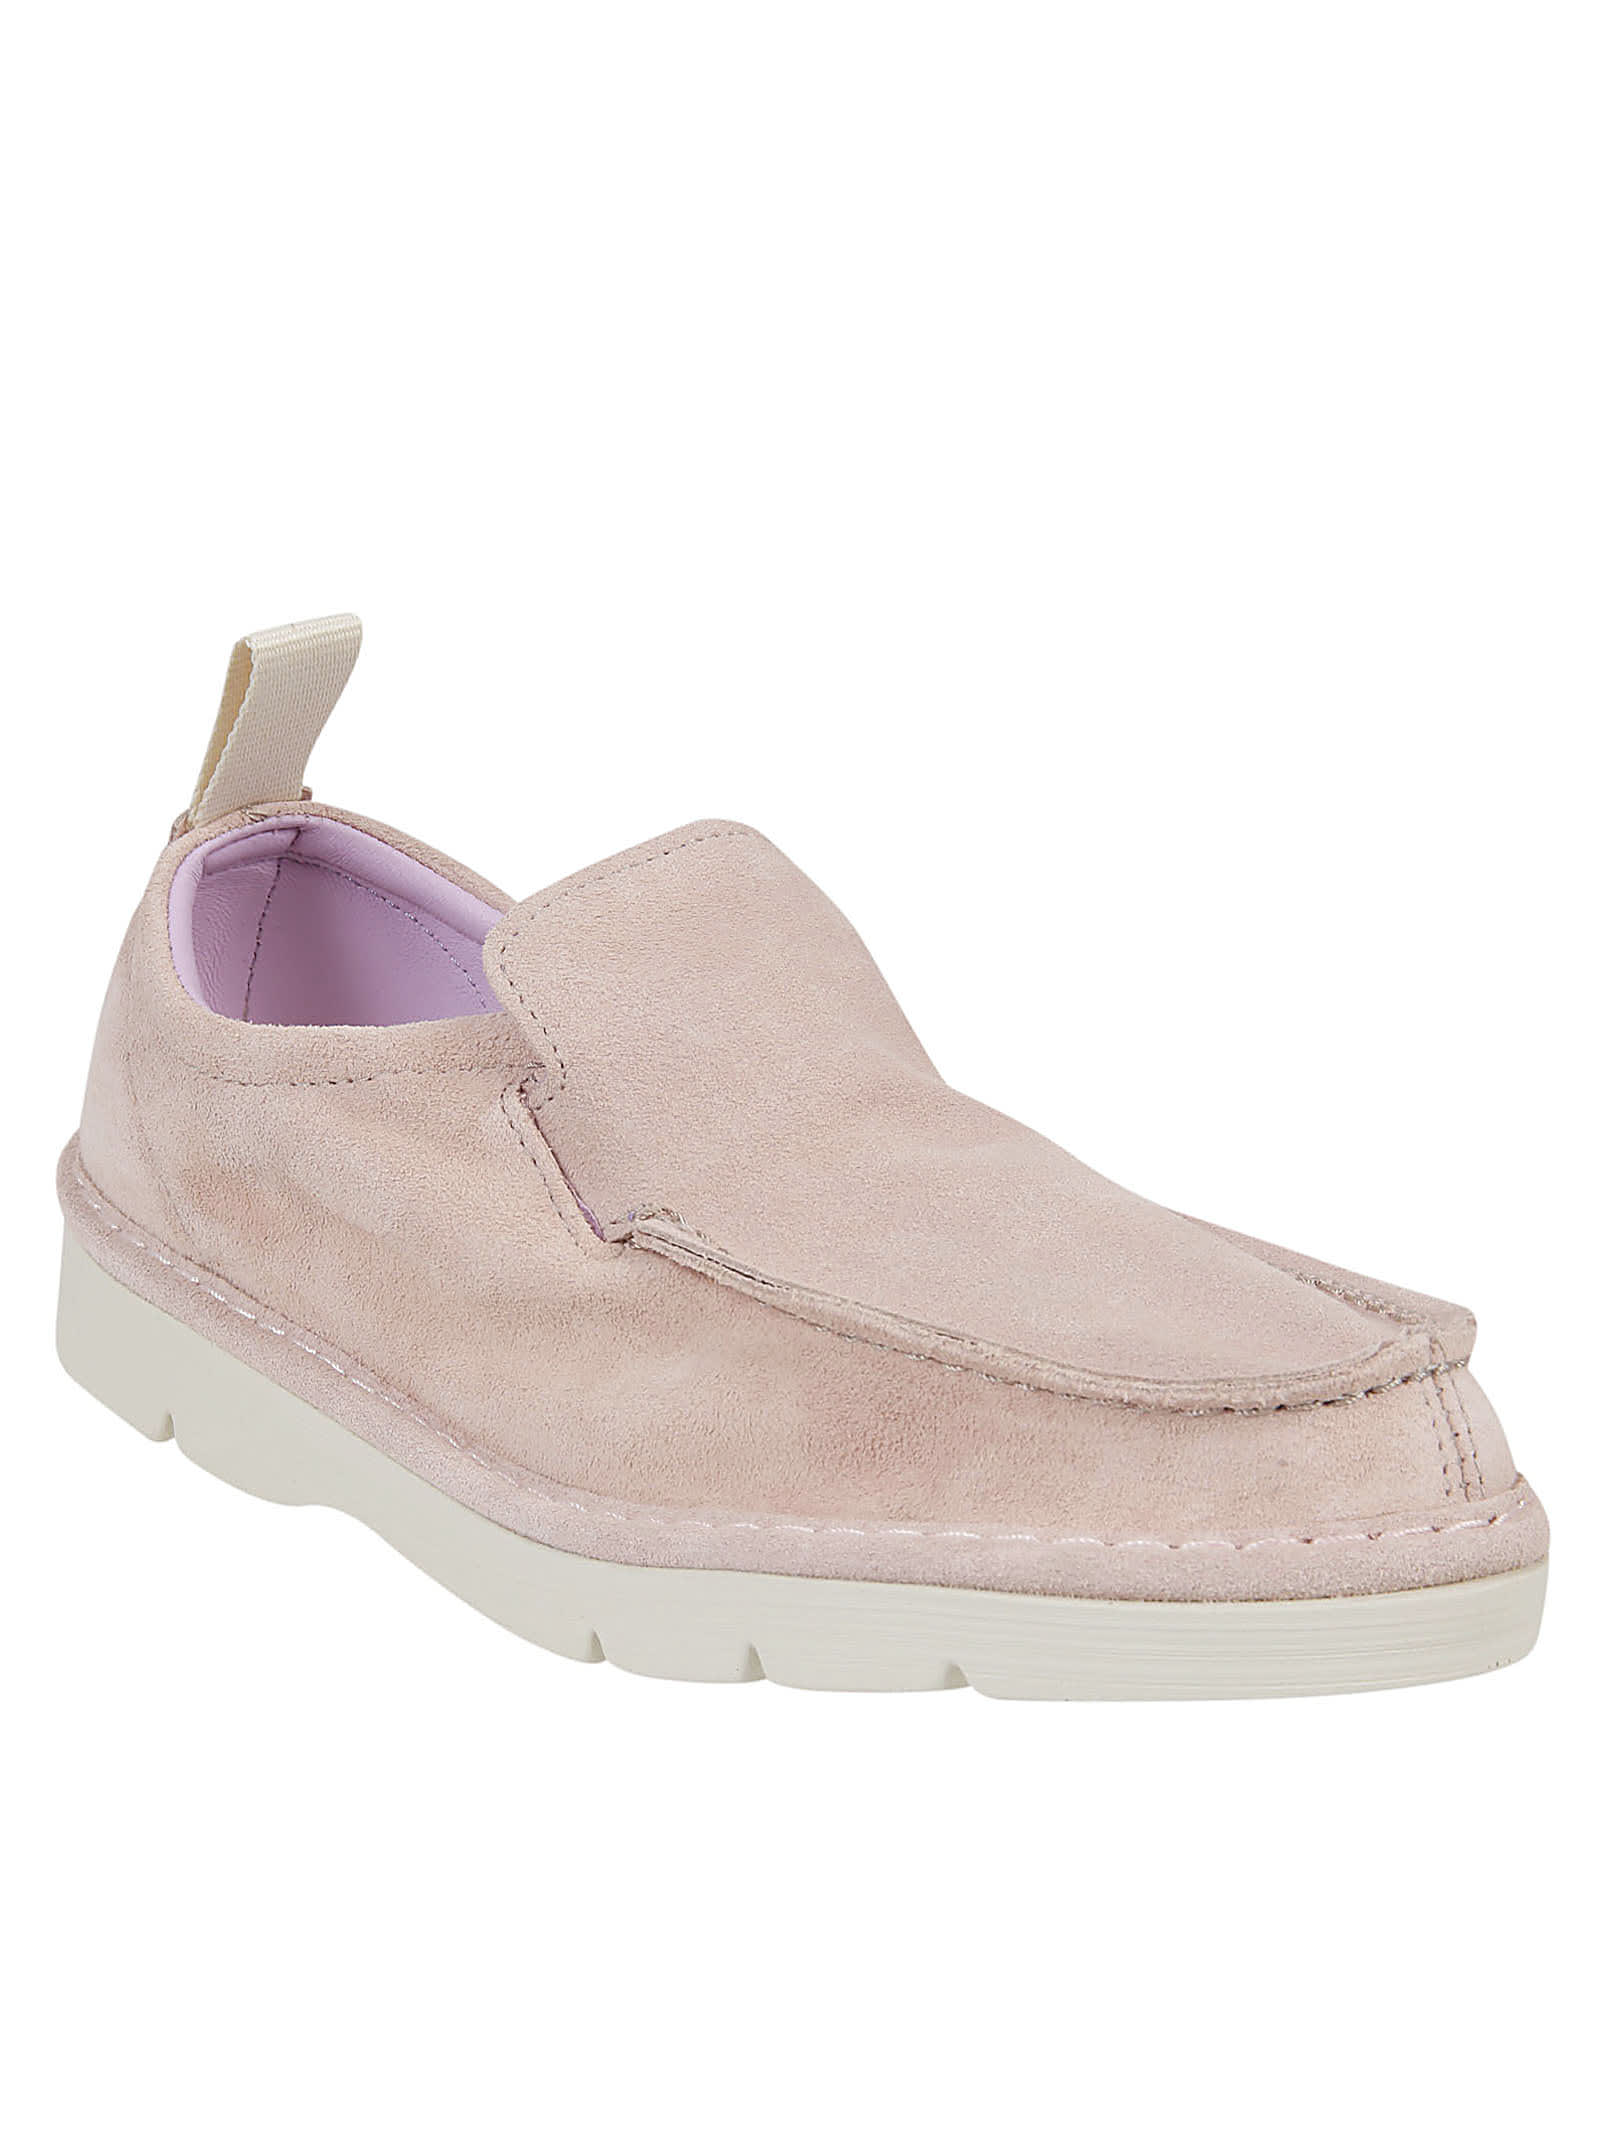 Shop Pànchic Flat Shoes Pink